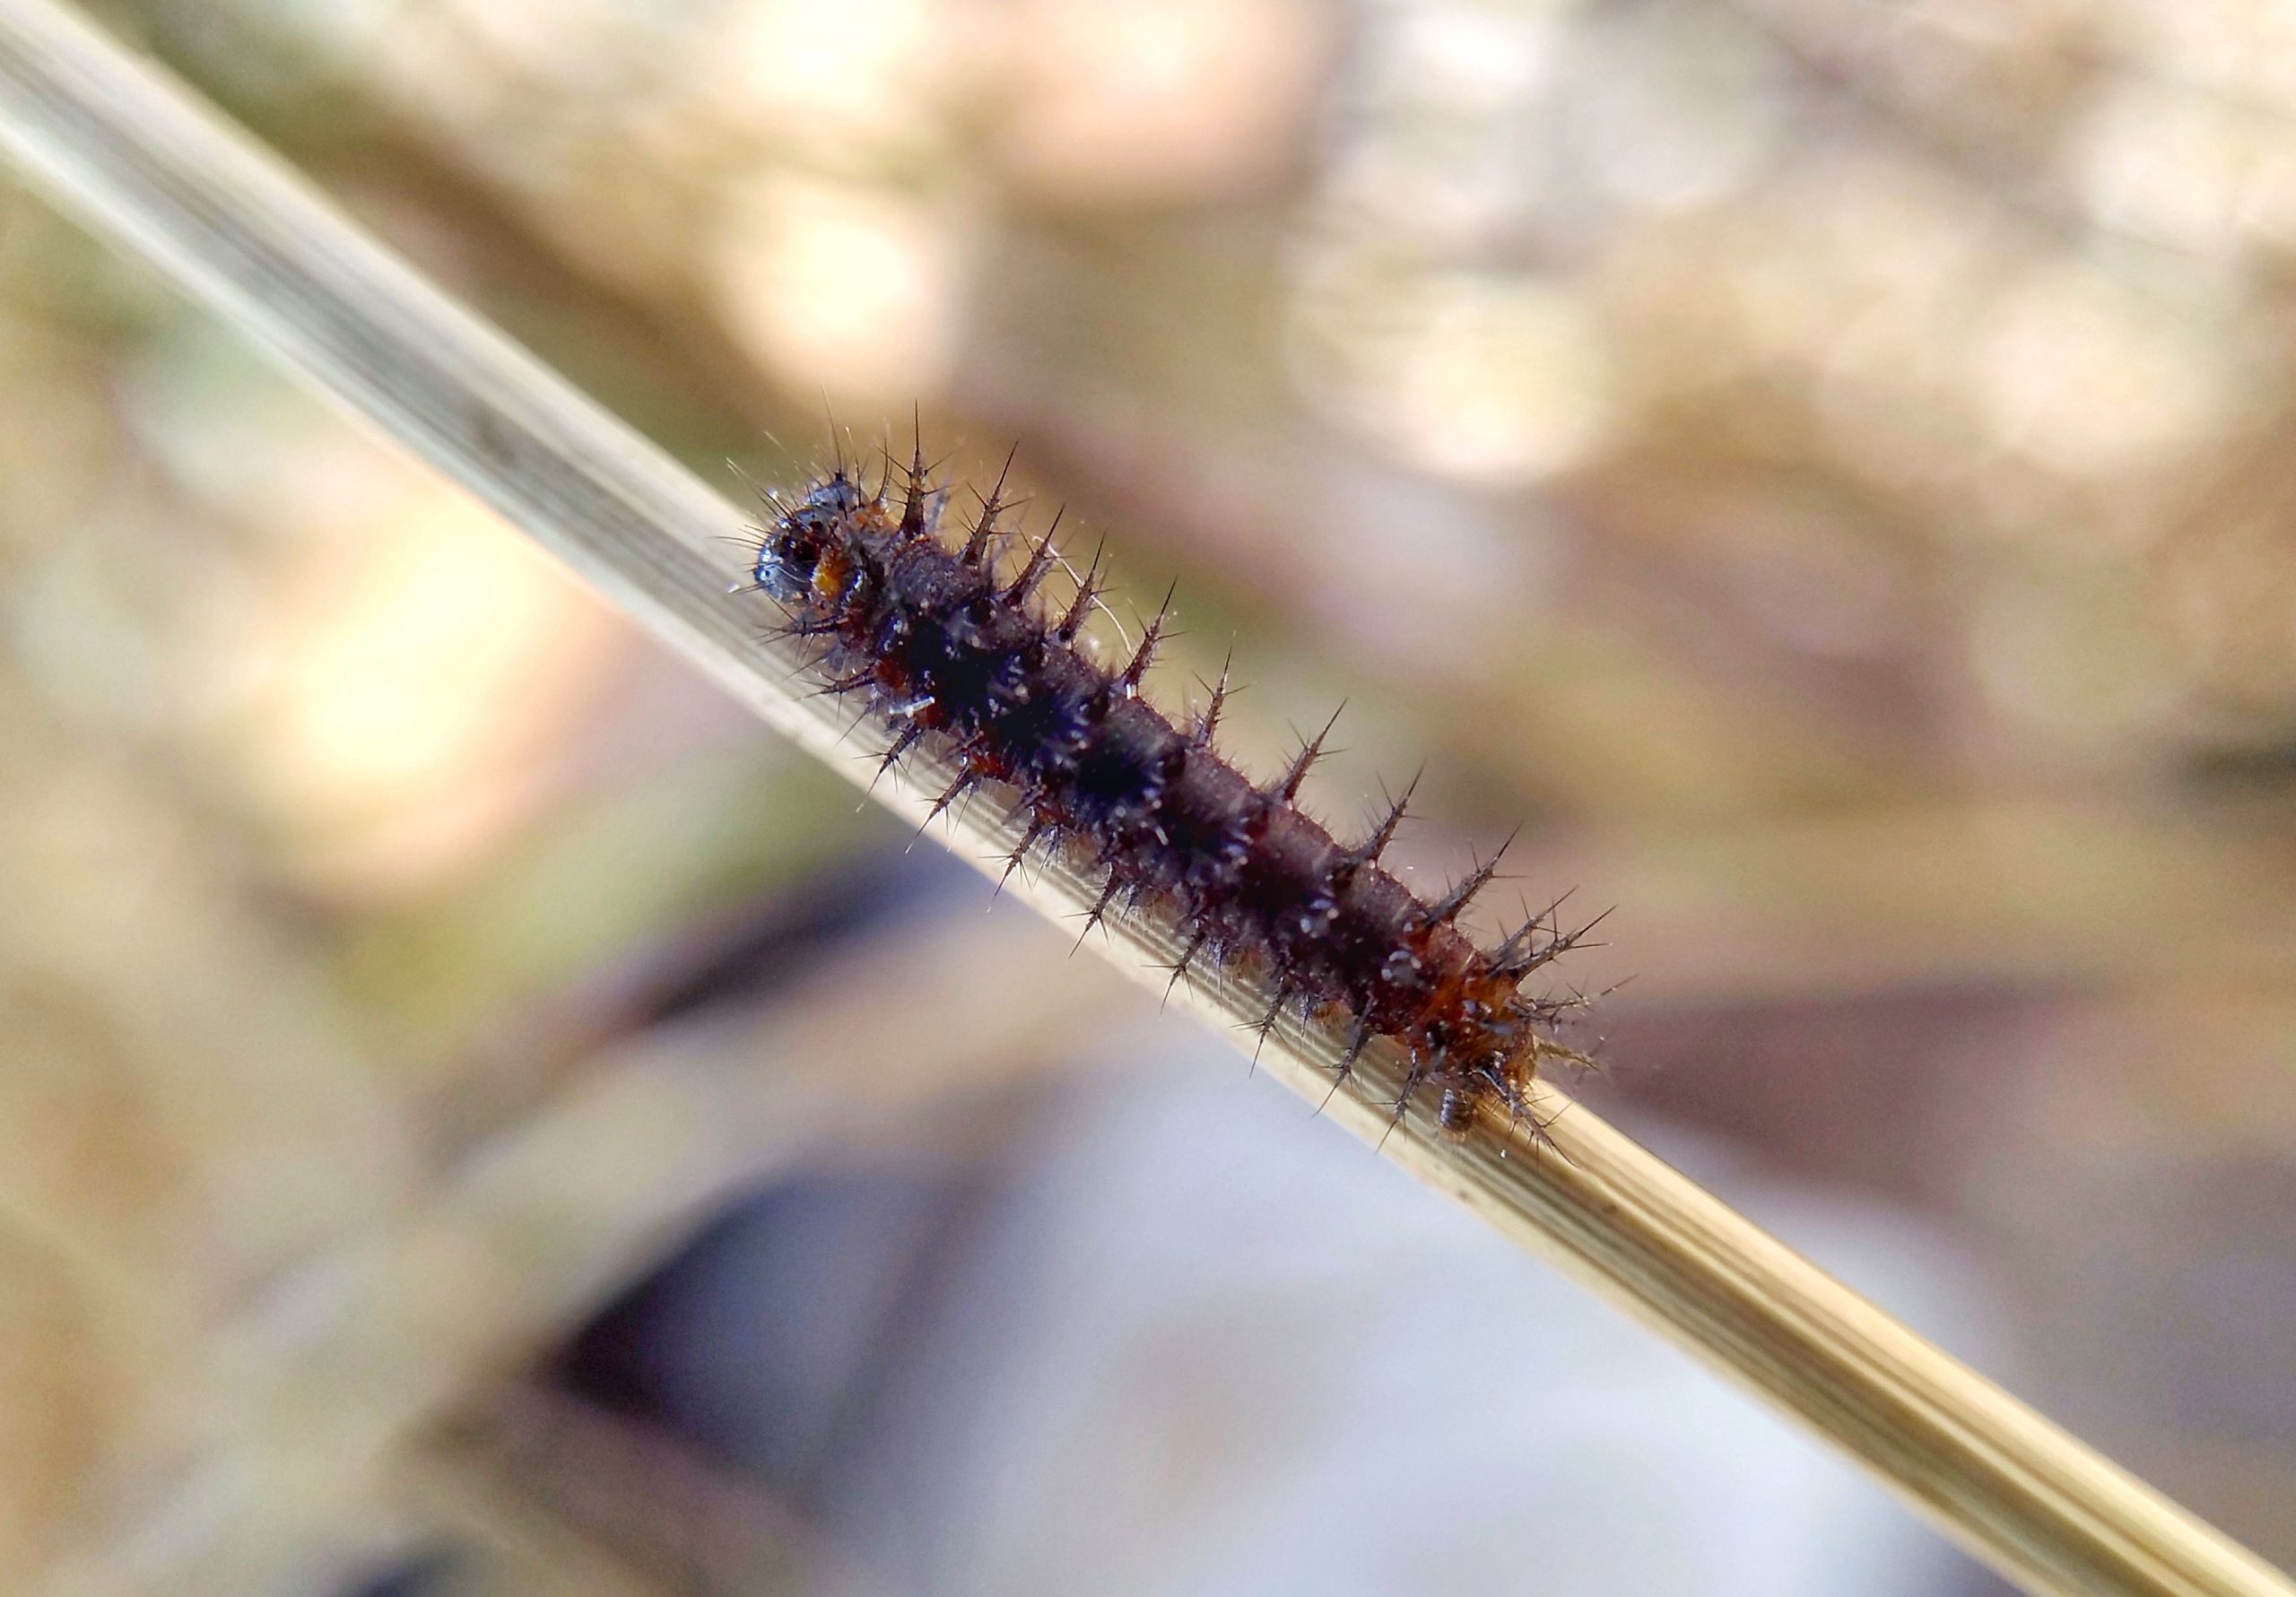 Caterpillar in the Stick on Focus